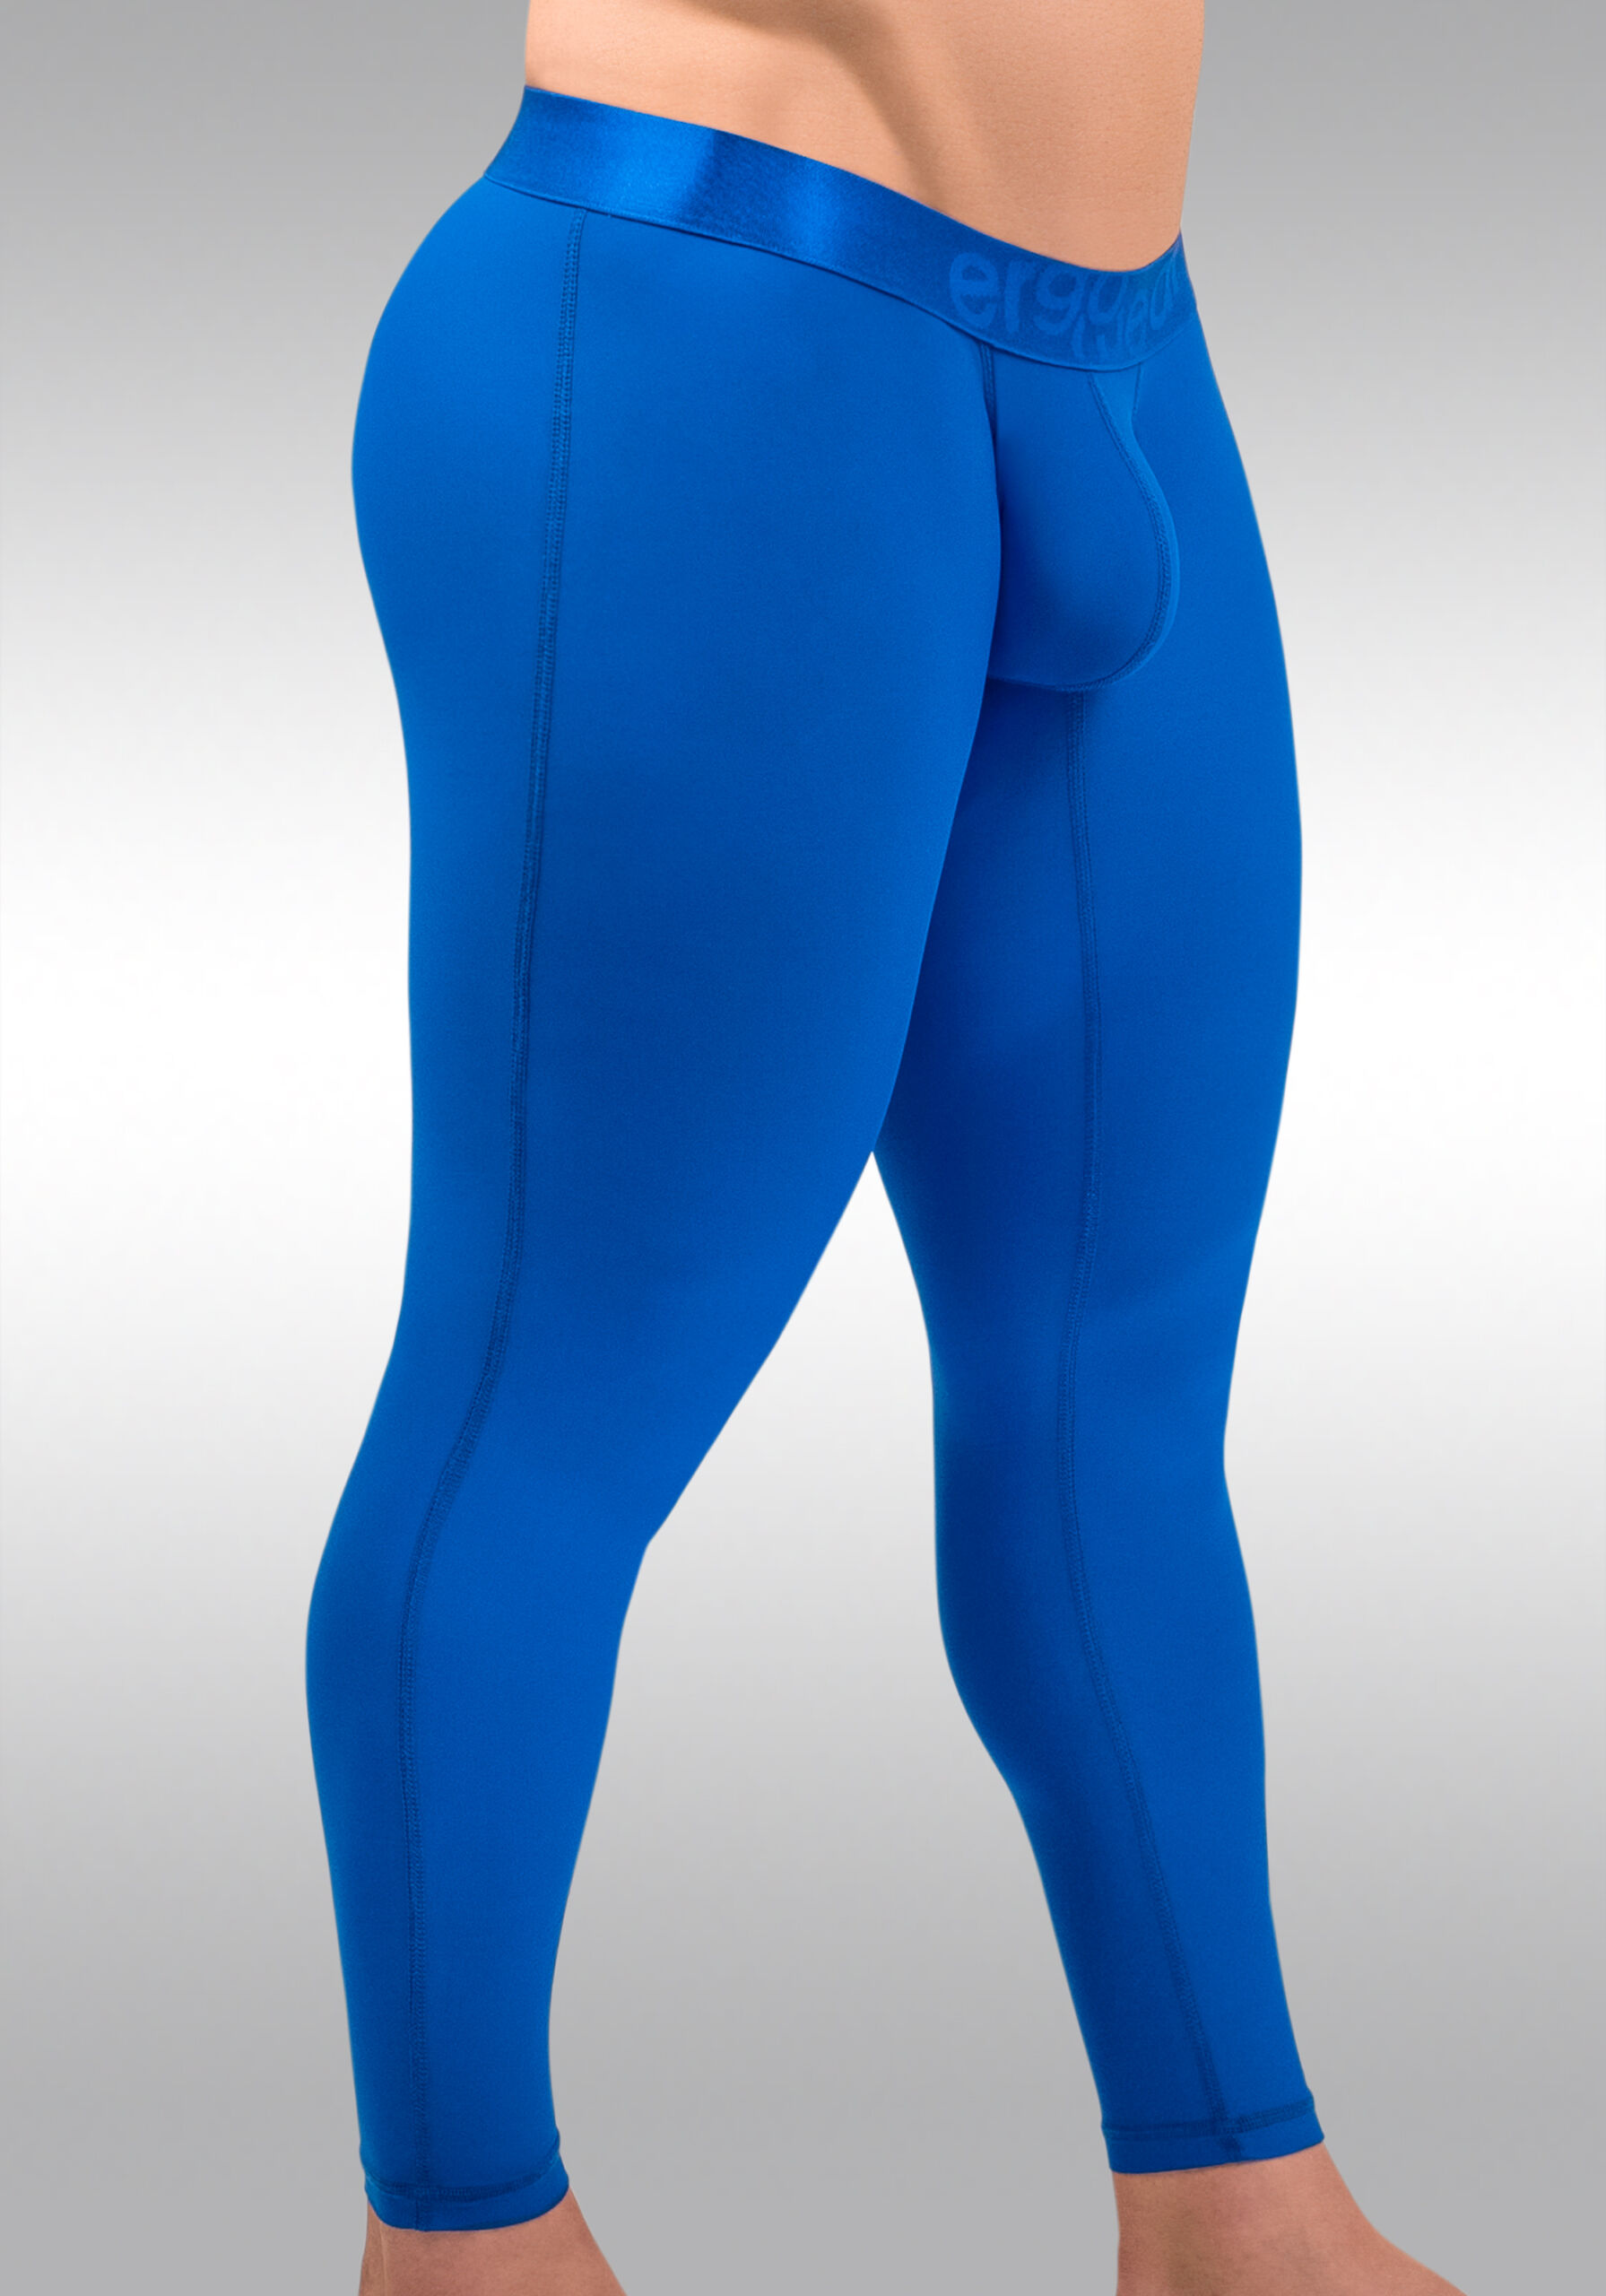 Blue Spandex tight Pant Size XL